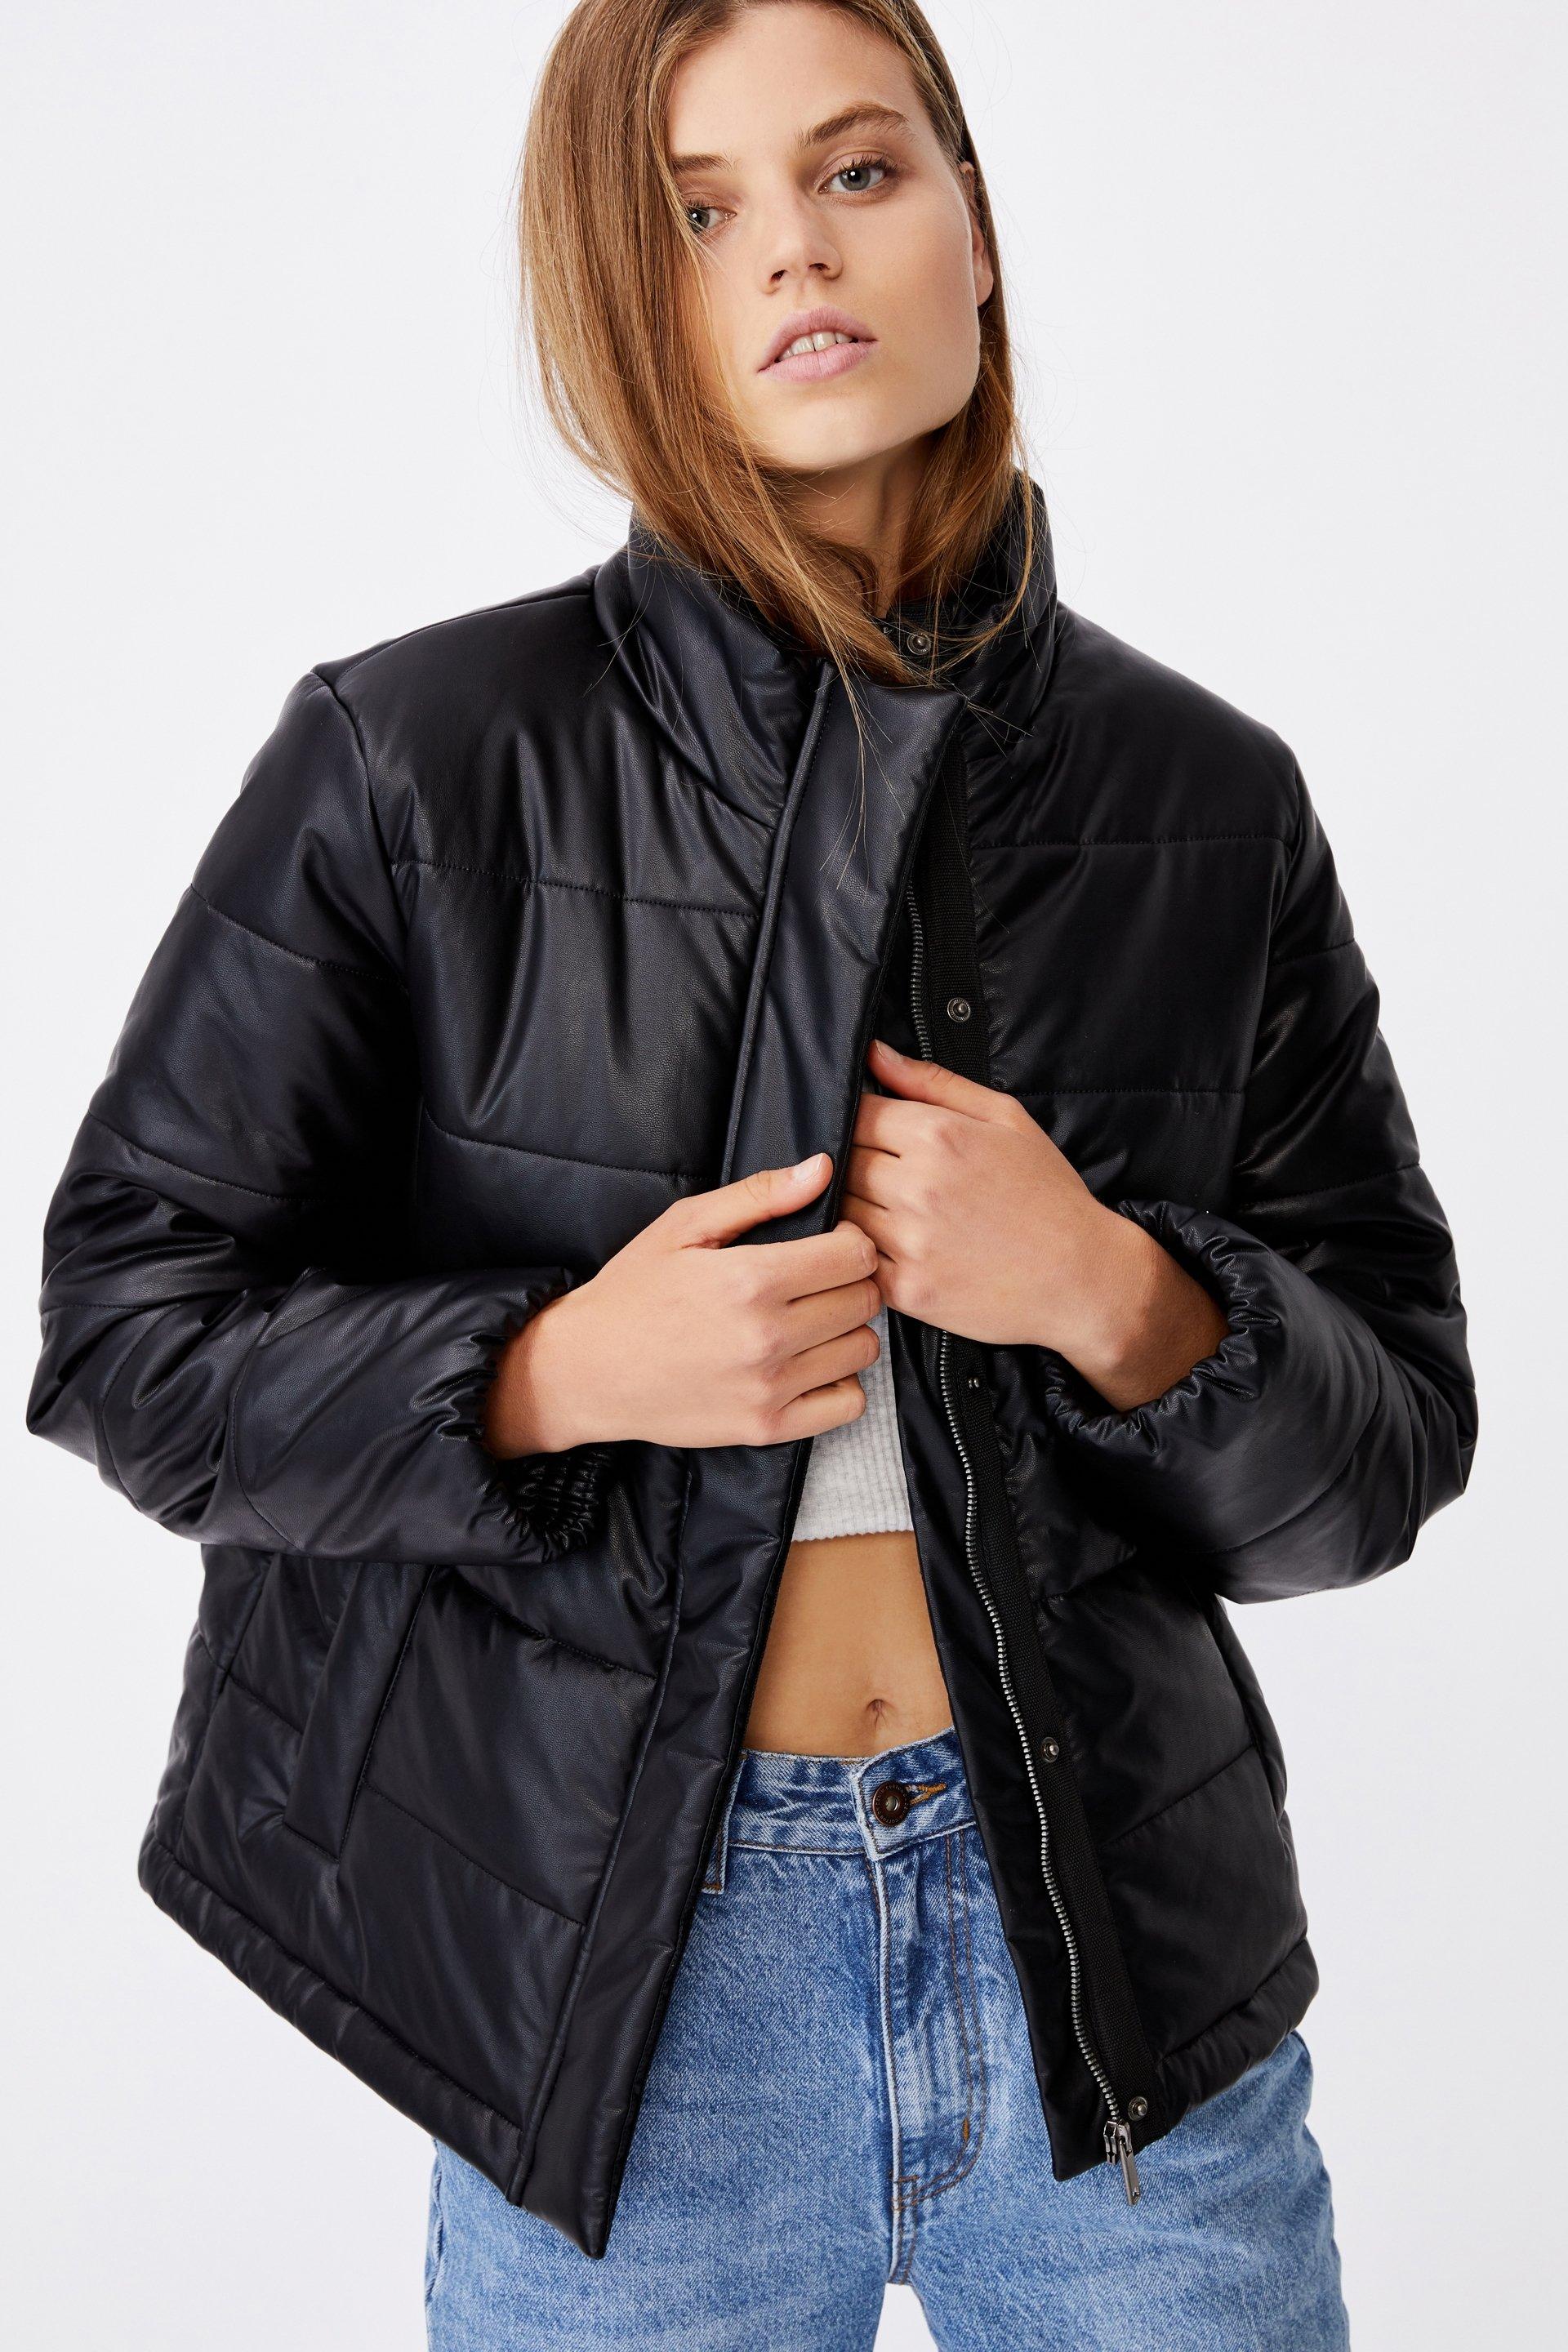 Vegan leather puffer jacket - black Cotton On Jackets | Superbalist.com